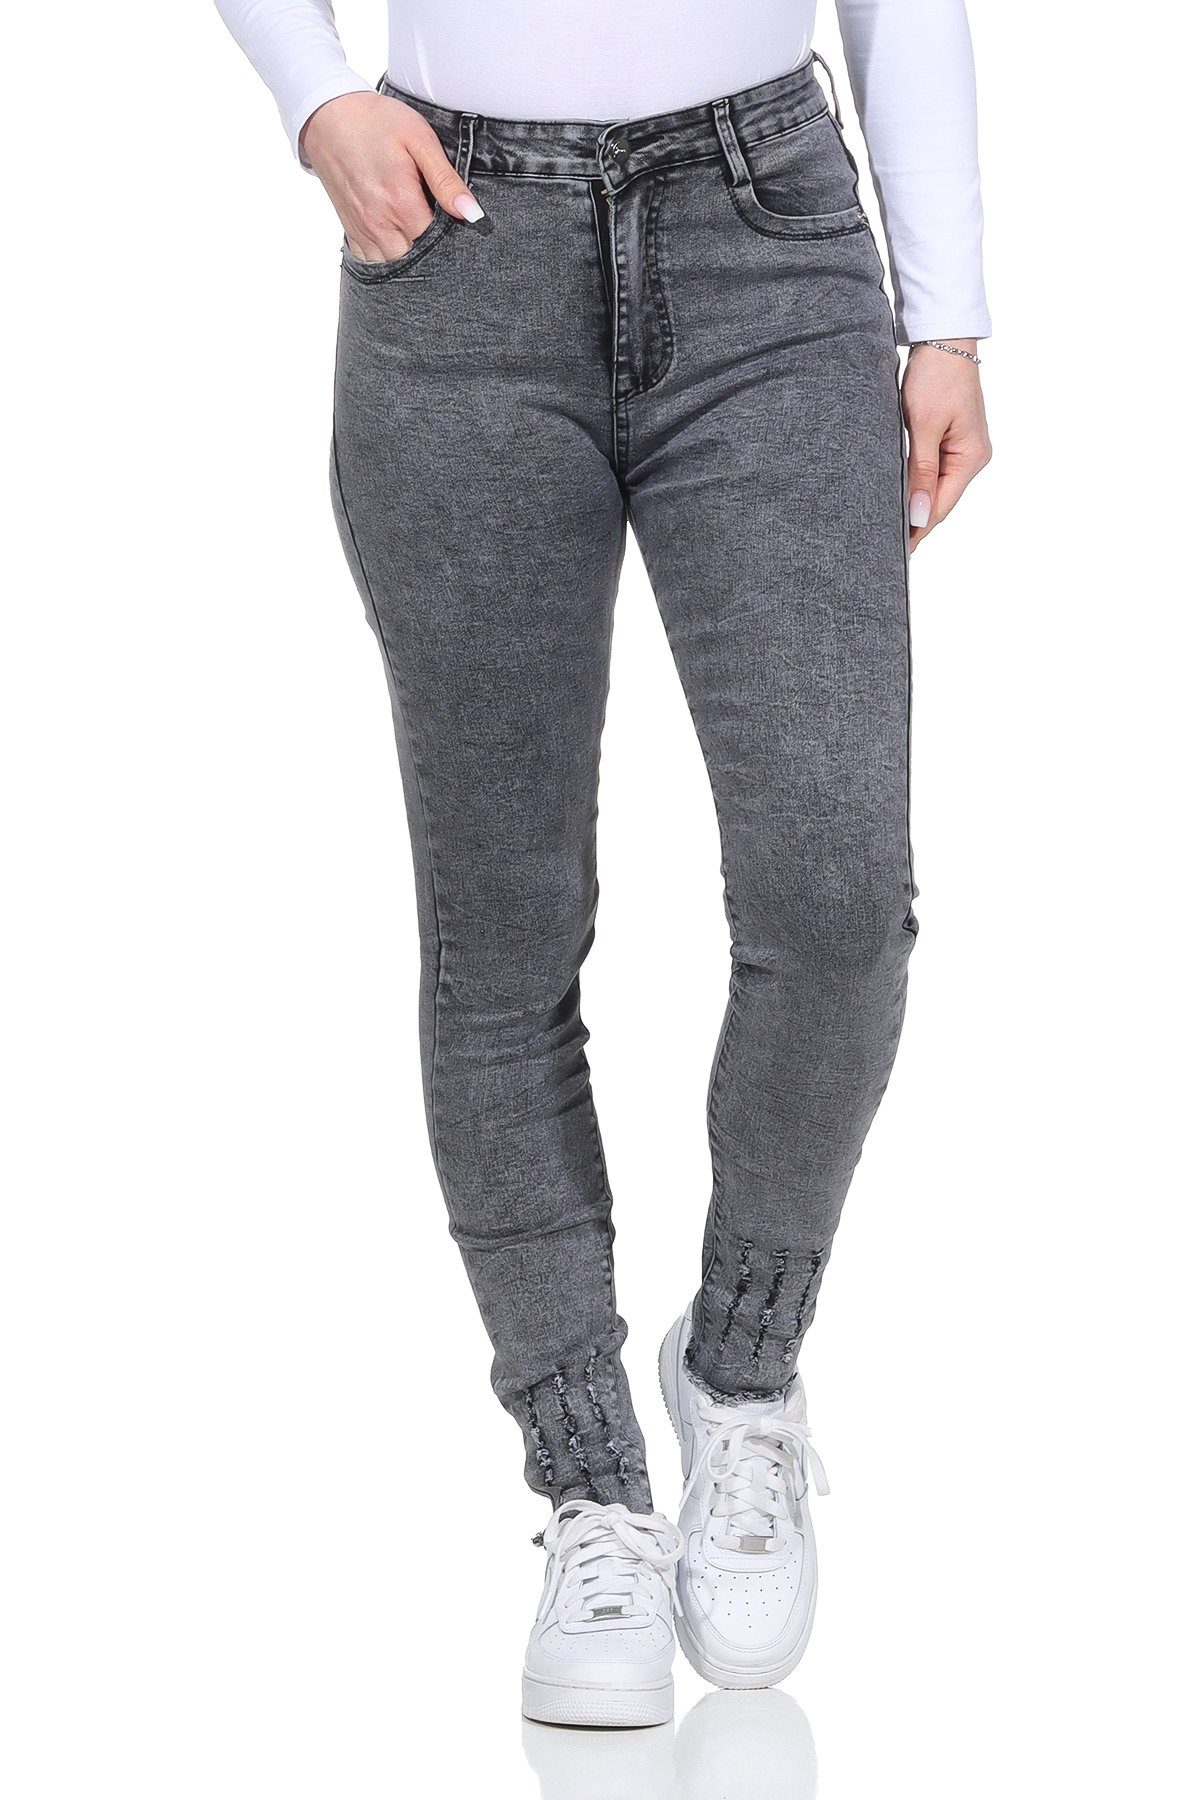 Aurela Damenmode 5-Pocket-Jeans Jeanshosen Look Destroyed Distressed Stretch moderner Jeans Damen für Grau Look